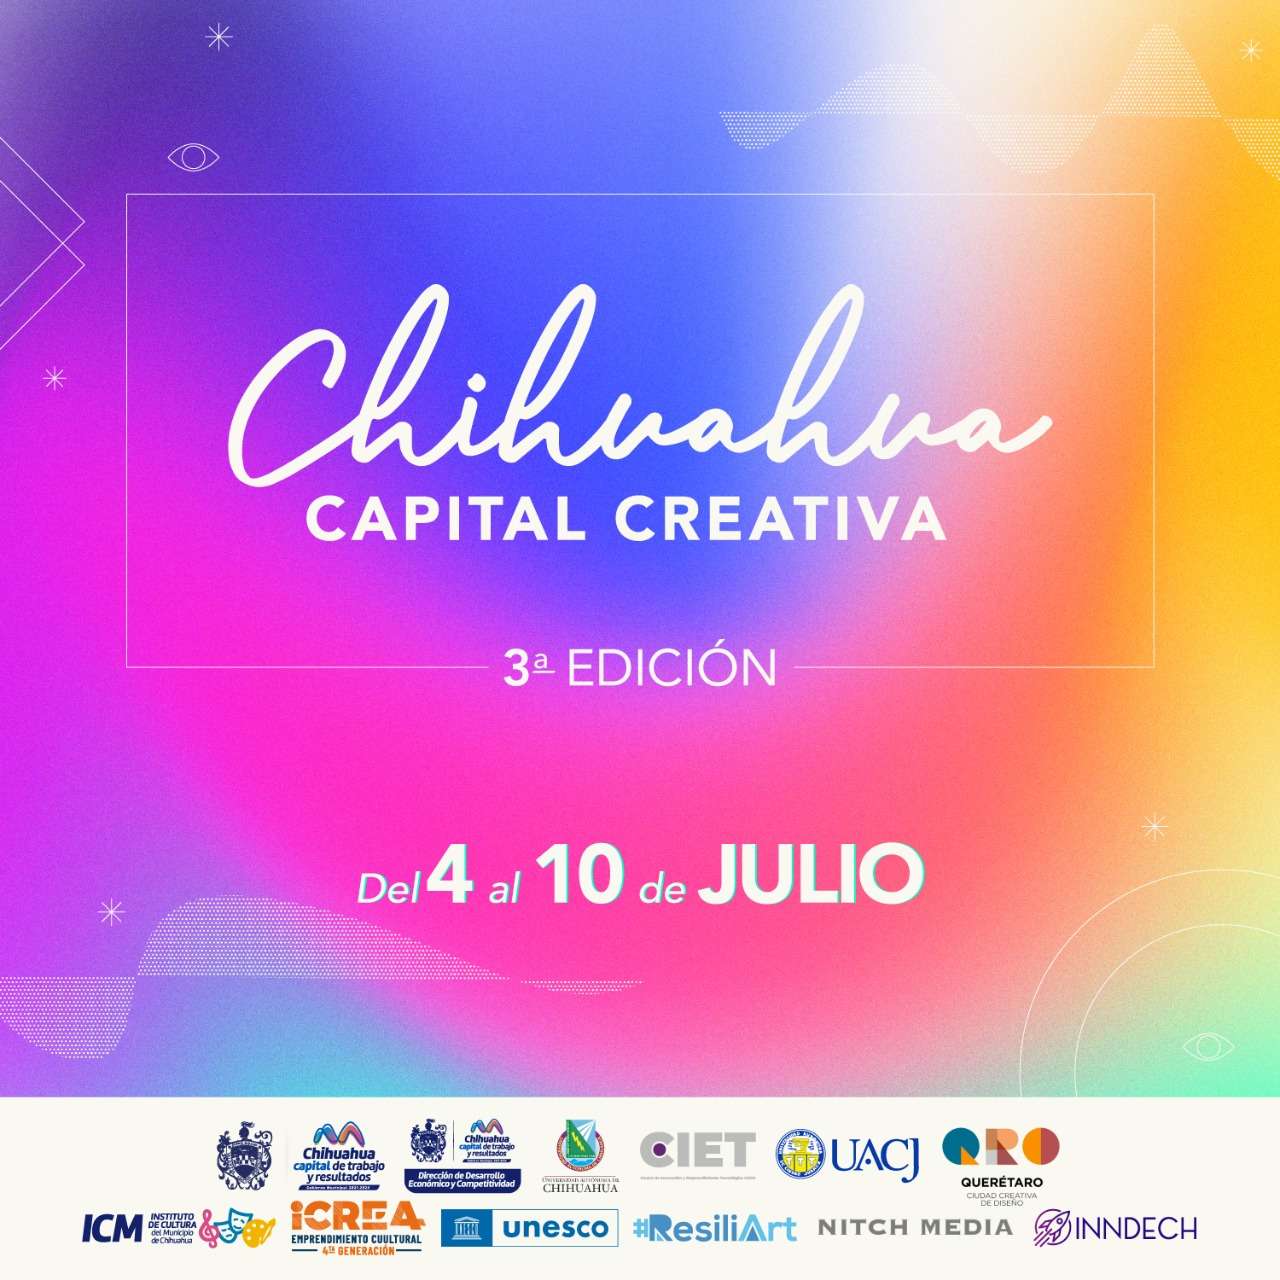 Invitan a la tercera edición de chihuahua capital creativa